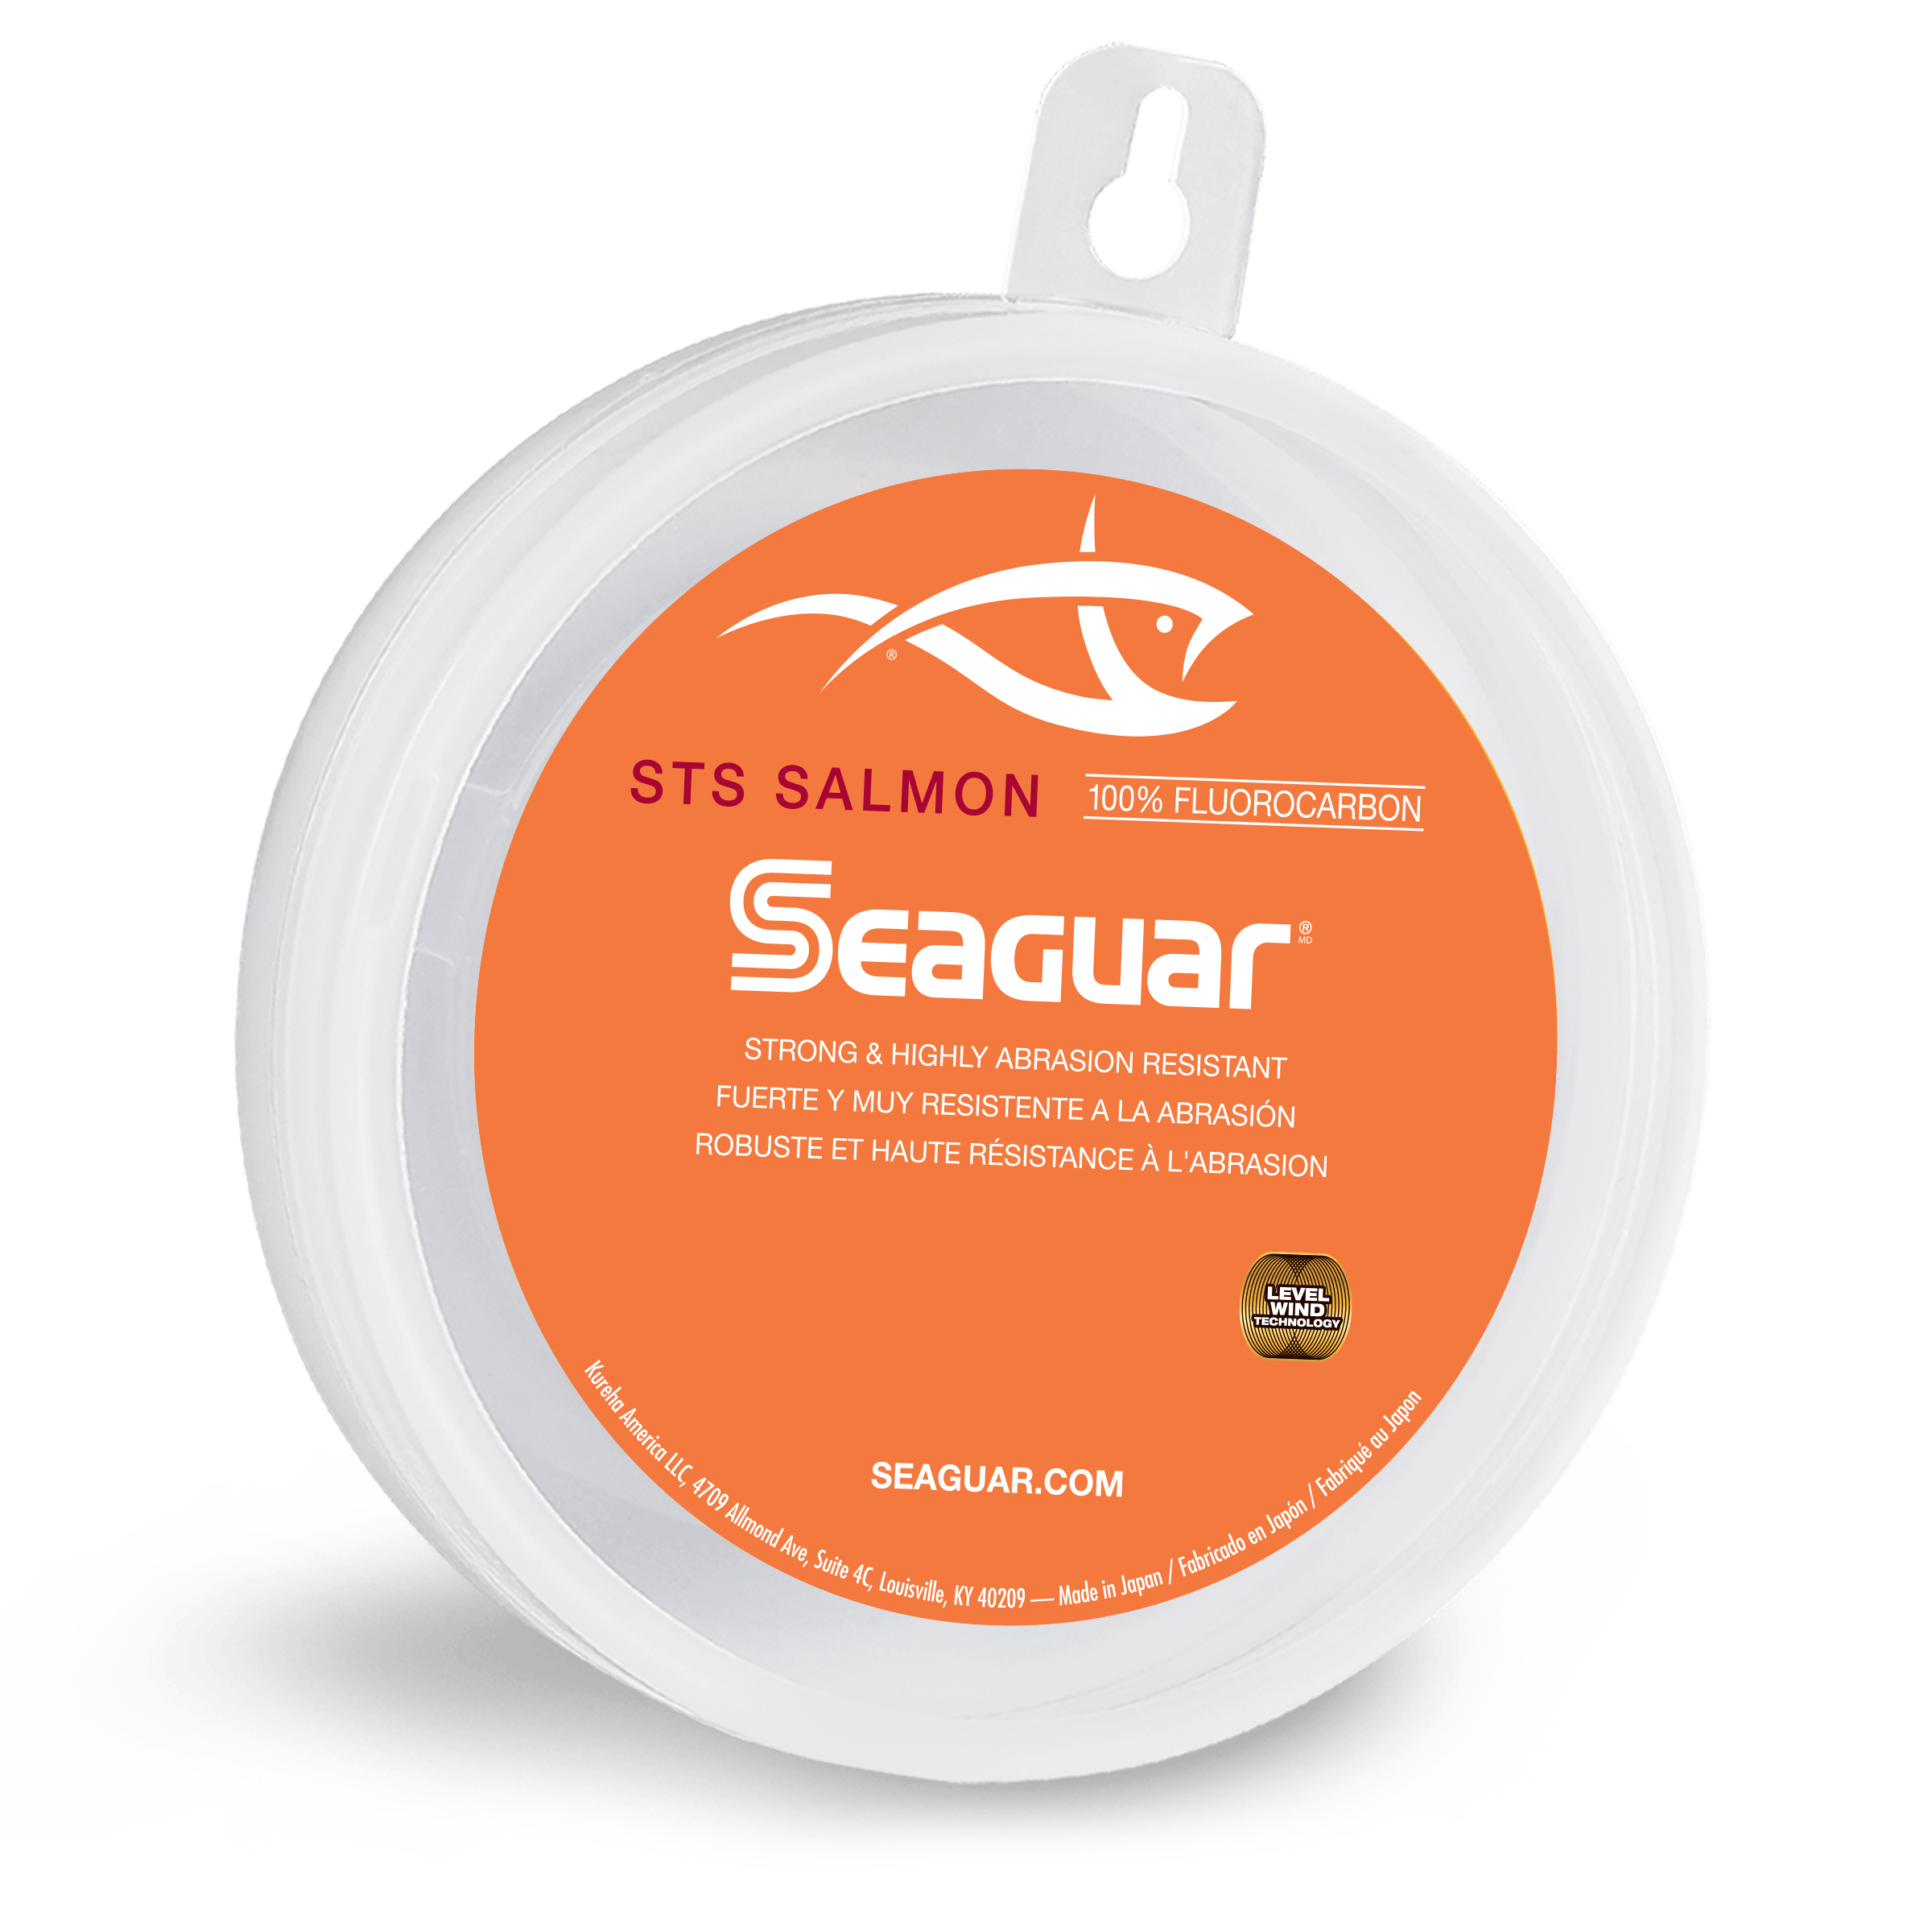 seaguar.com